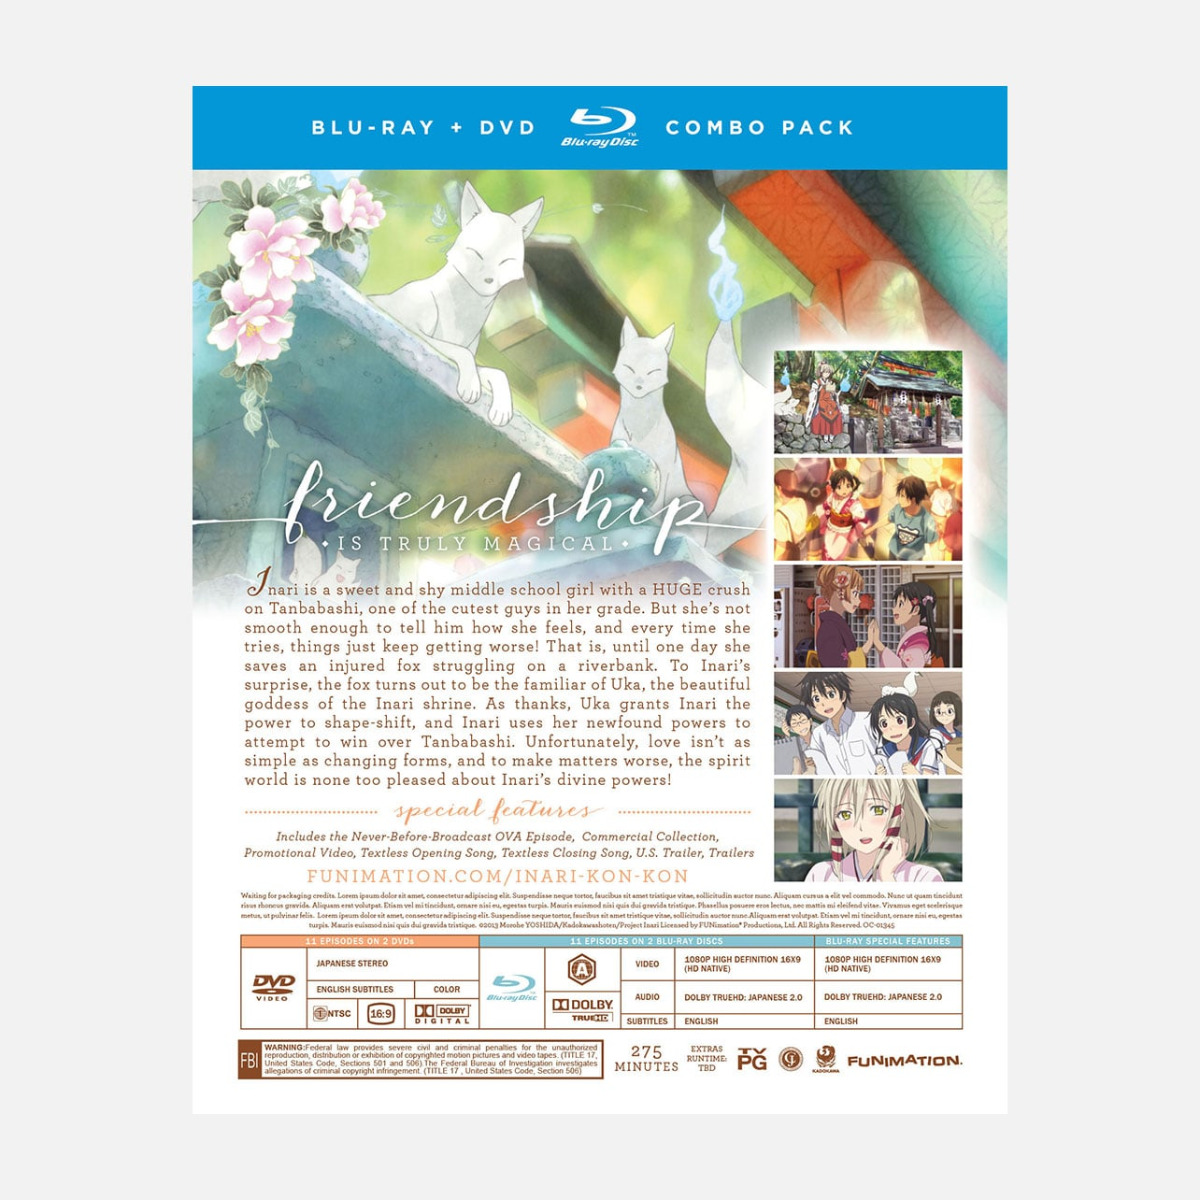 Inari Kon Kon - The Complete Series - Blu-ray + DVD image count 1